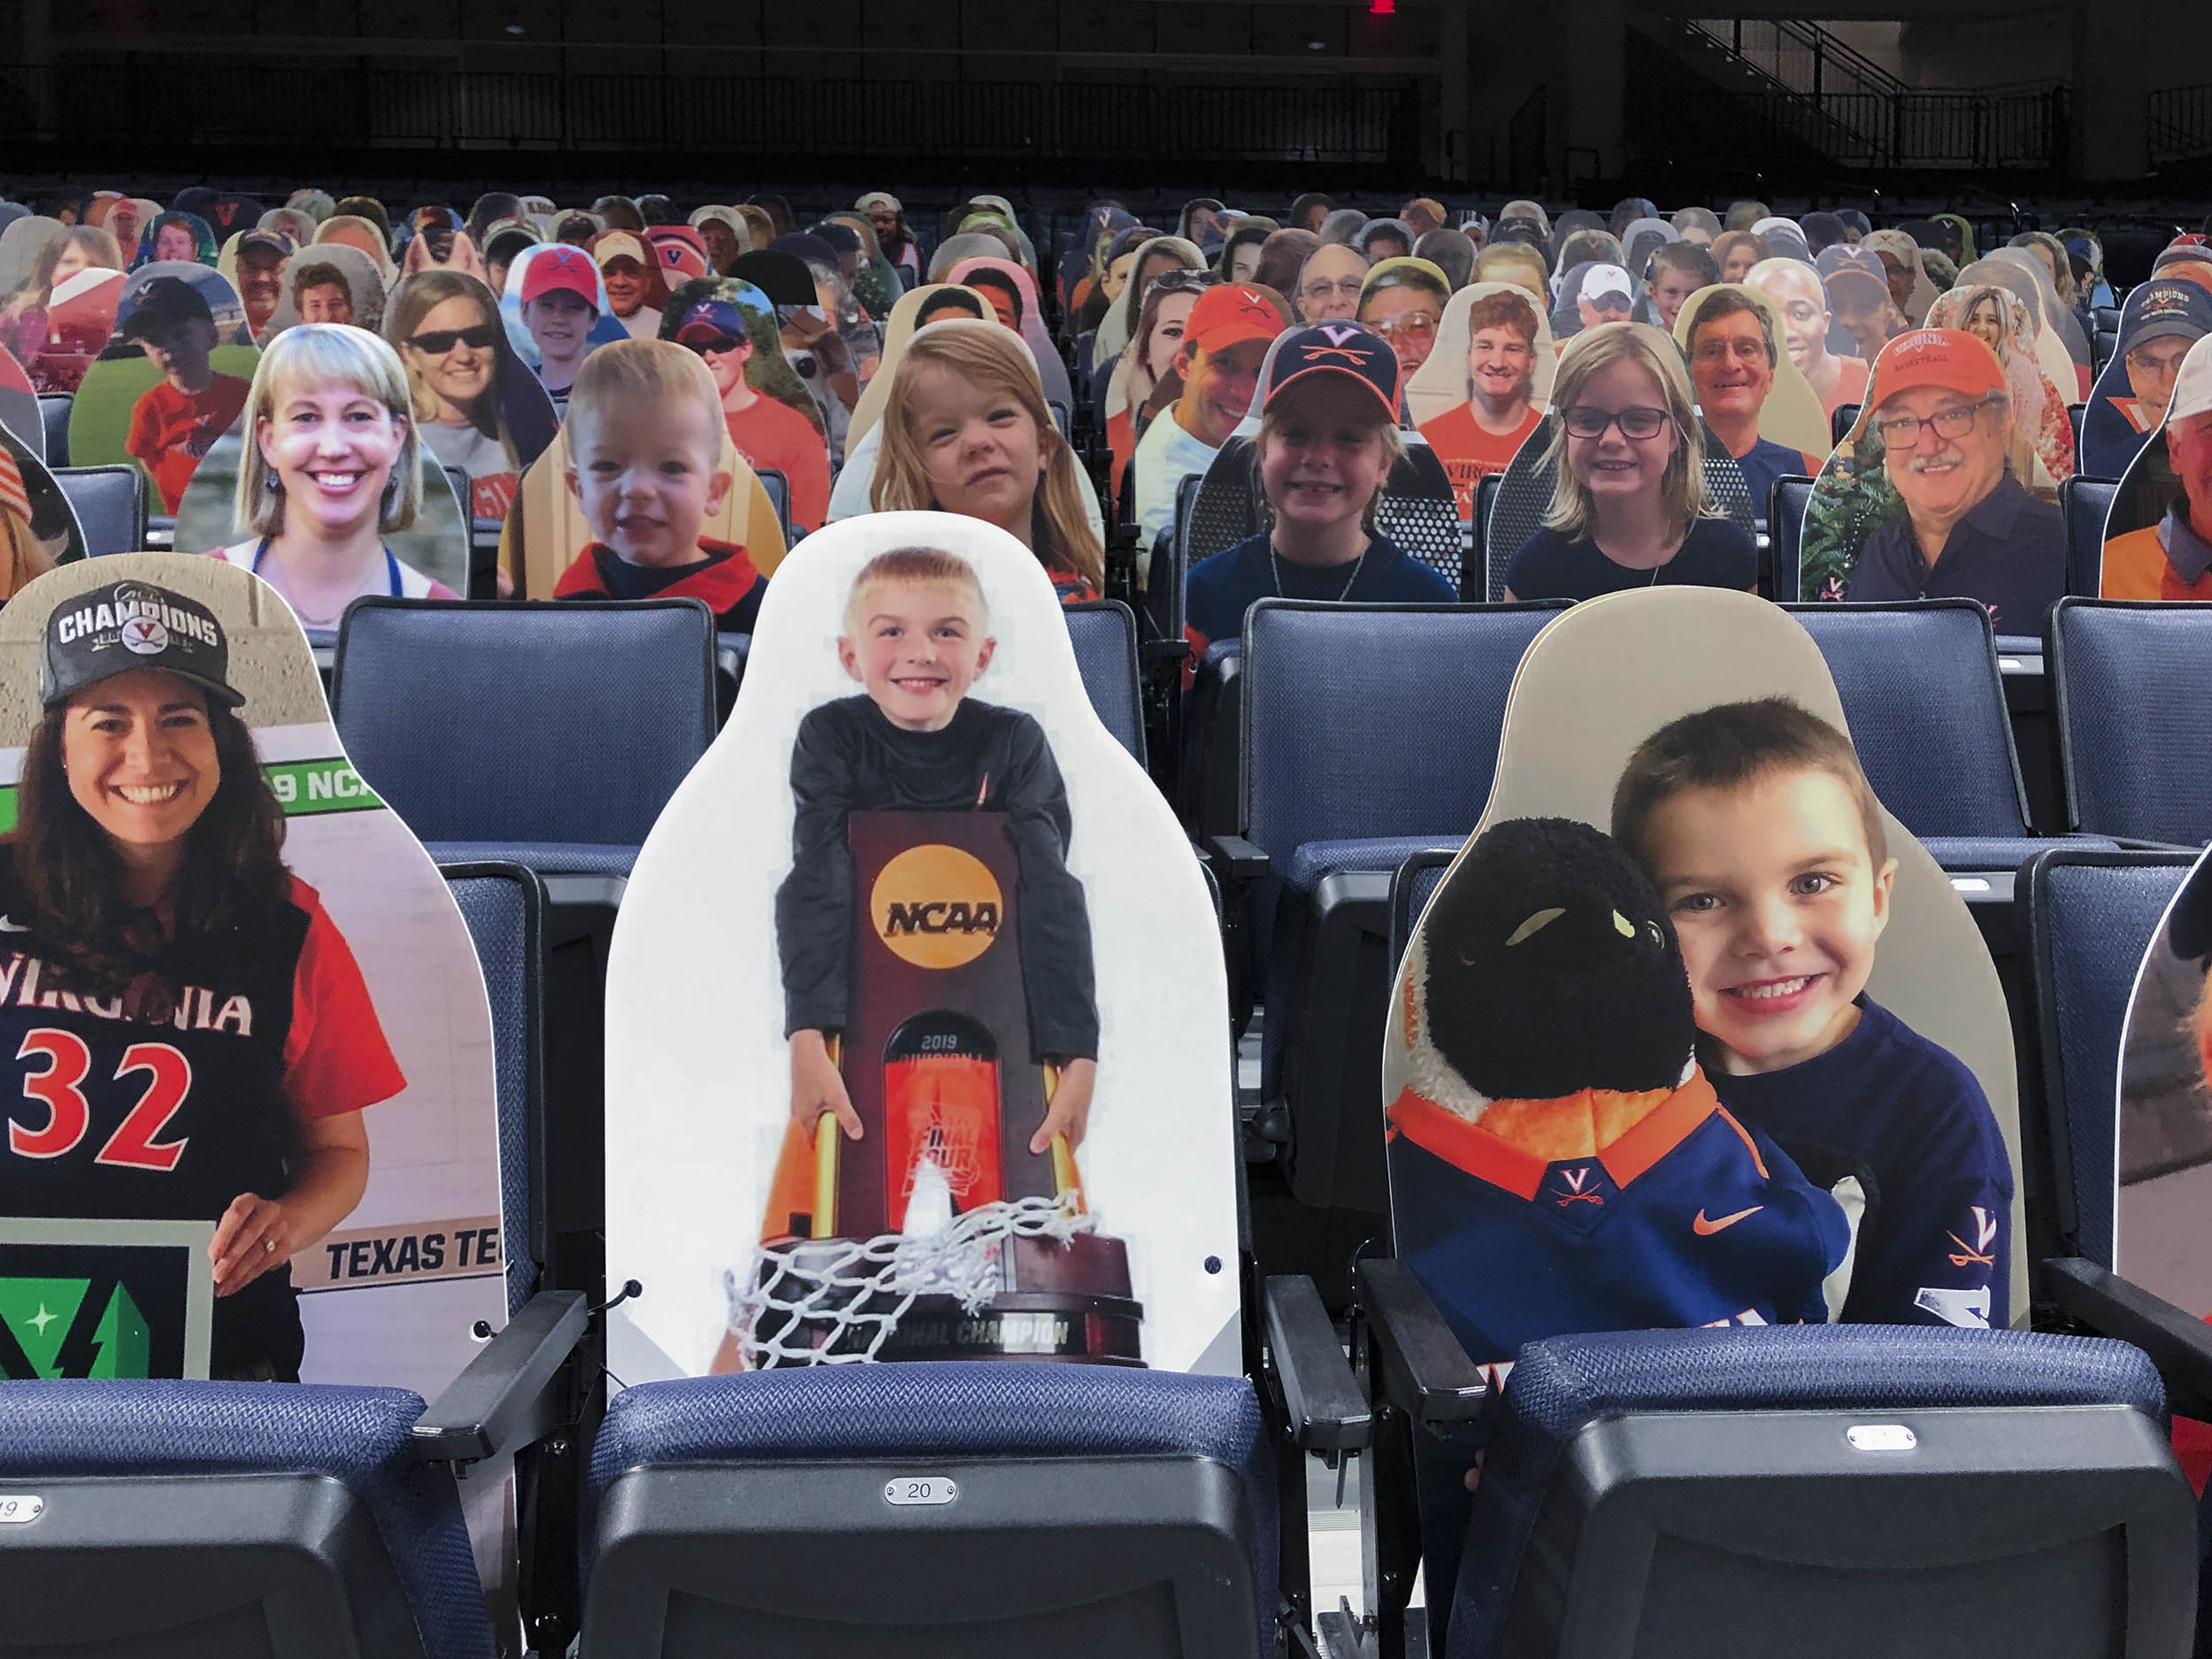 Cardboard cutouts of fans placed in every seat in John Paul Jones Arena